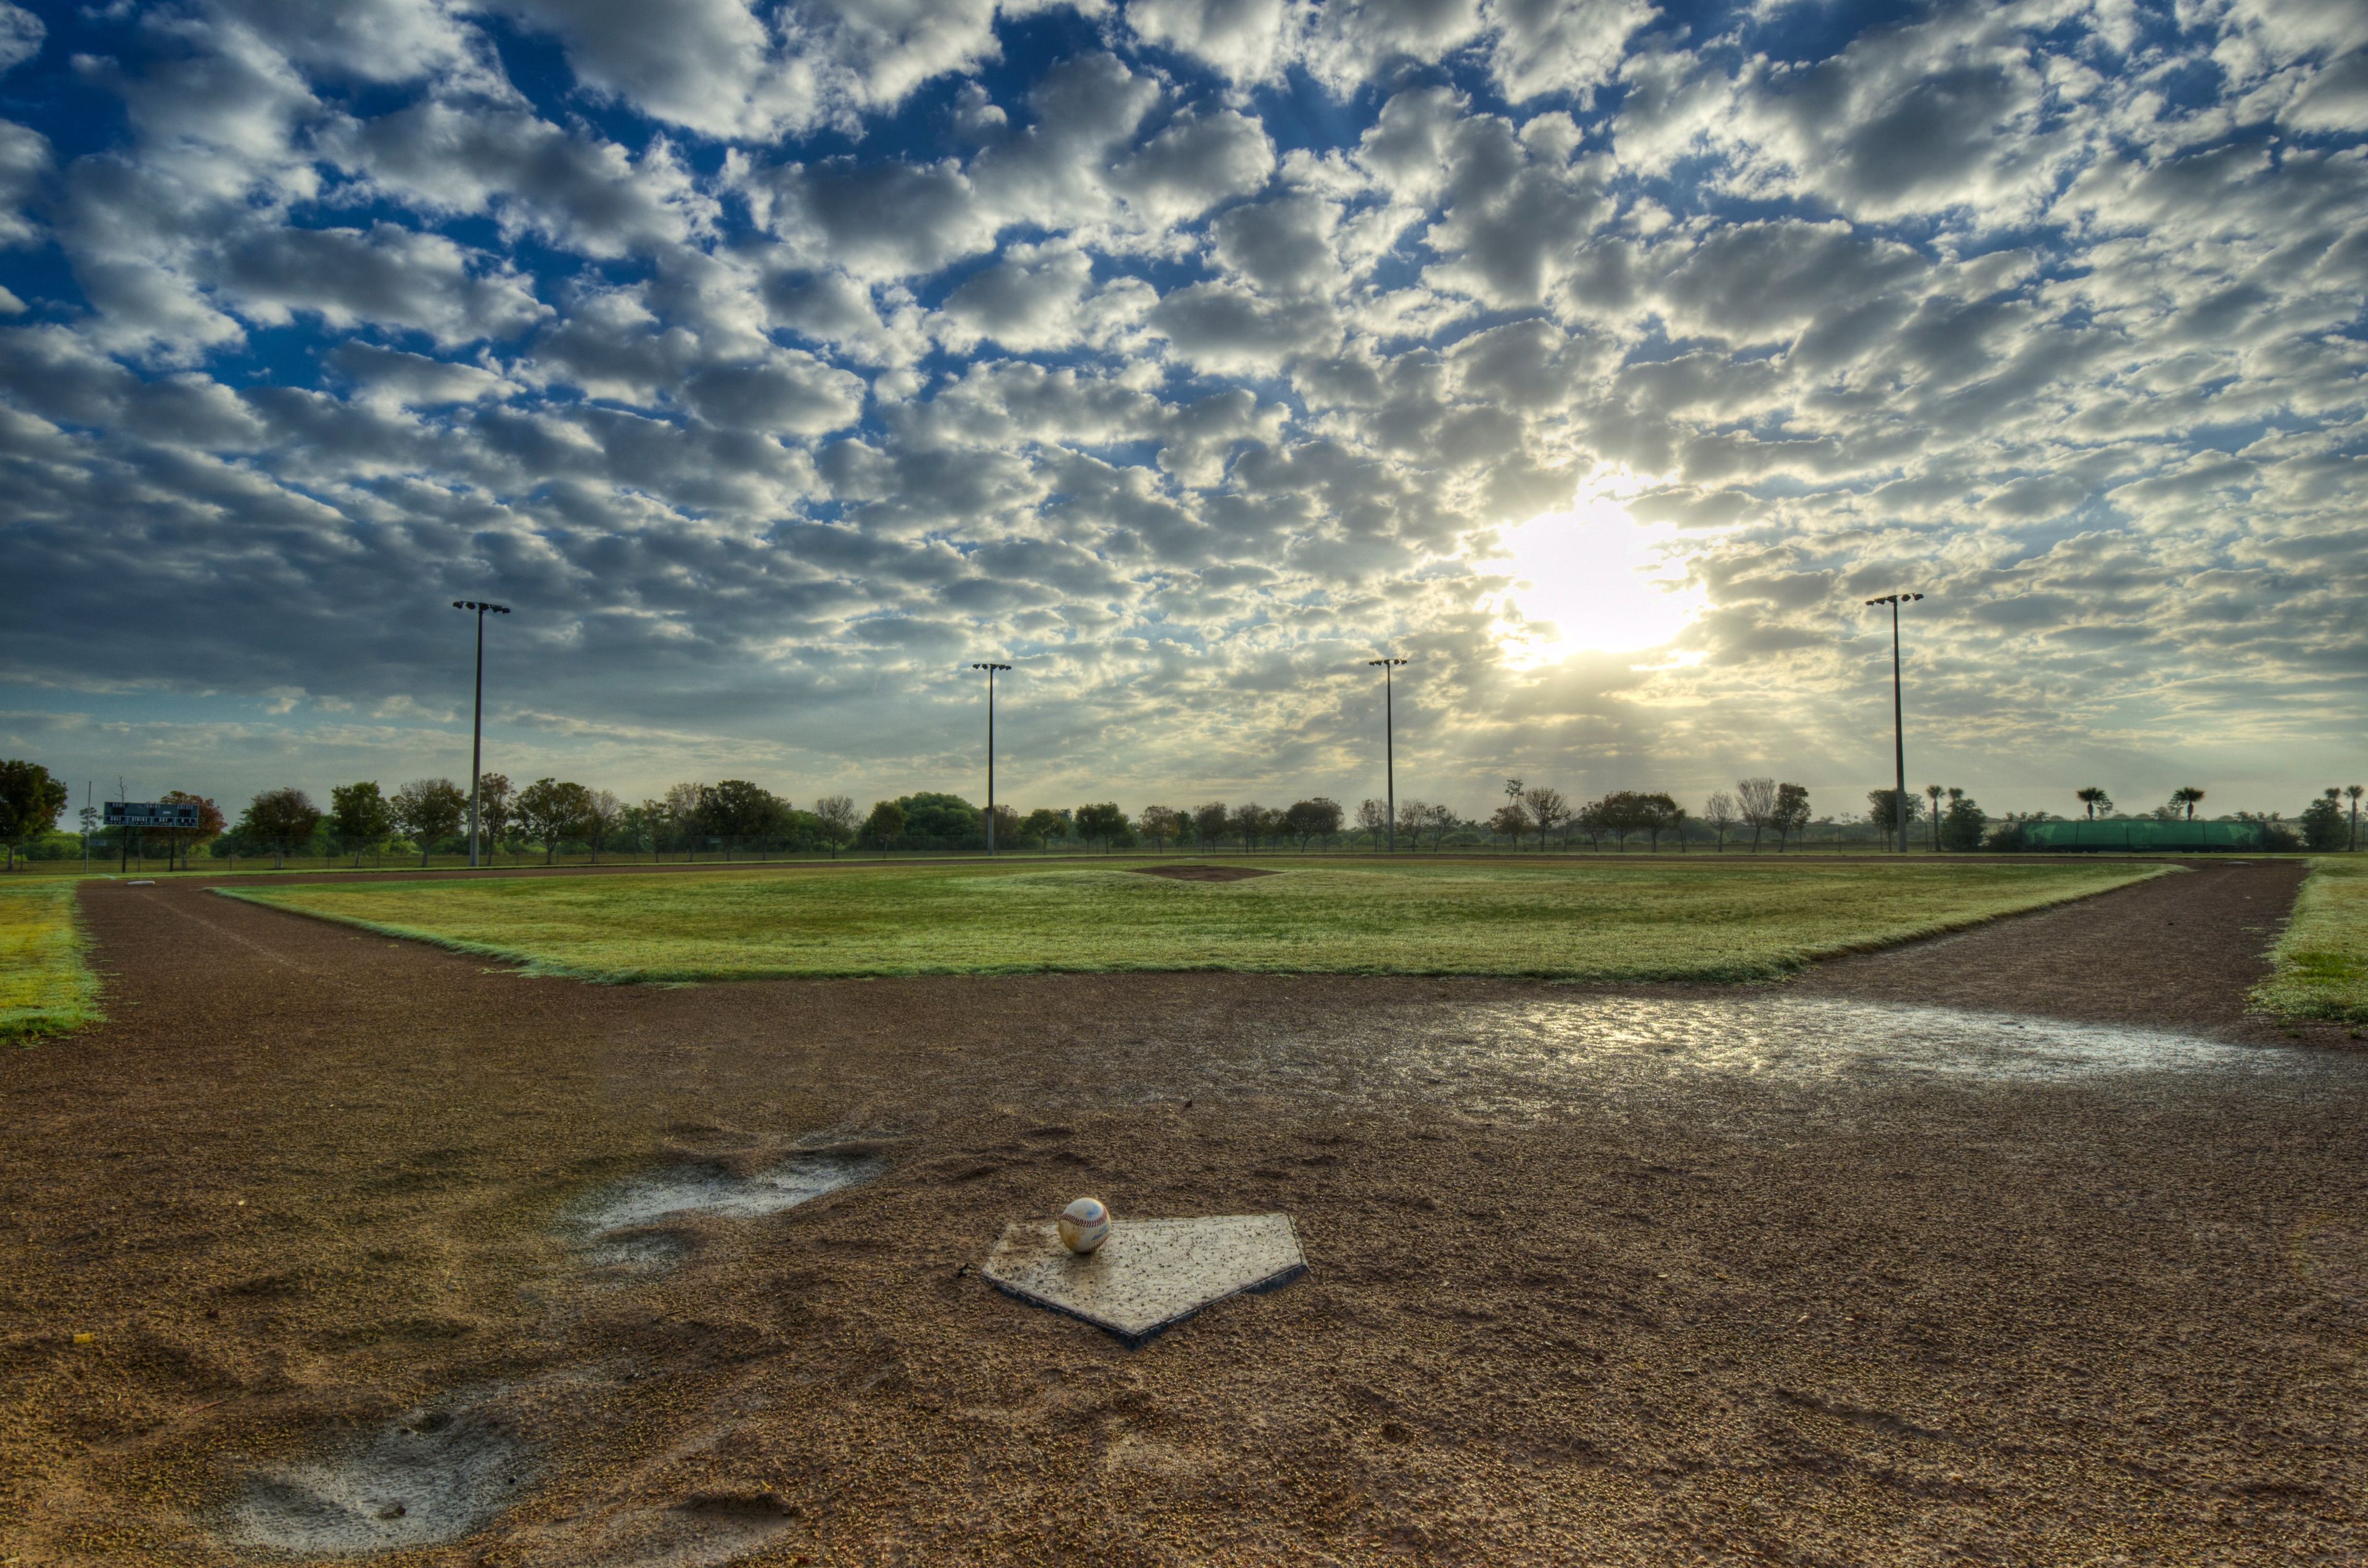 The sun rises over a baseball field.  